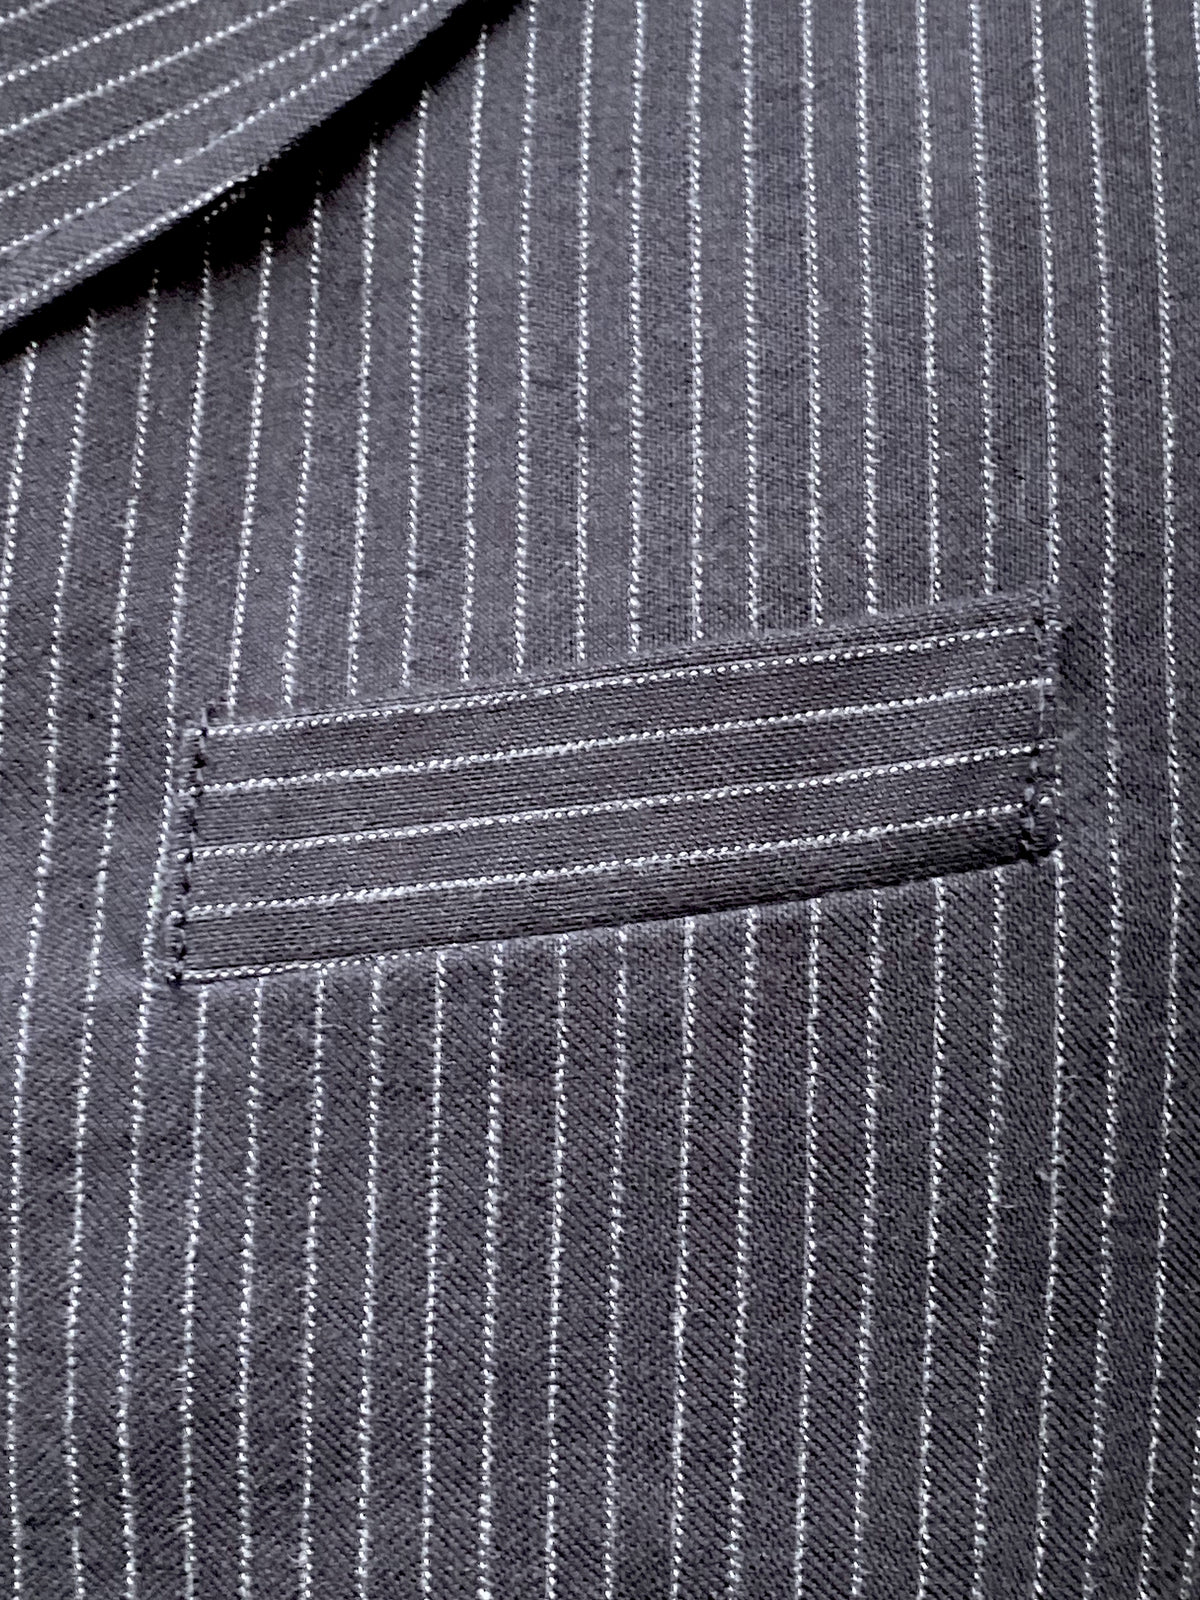 Hansen Garments William Vest Black Pin